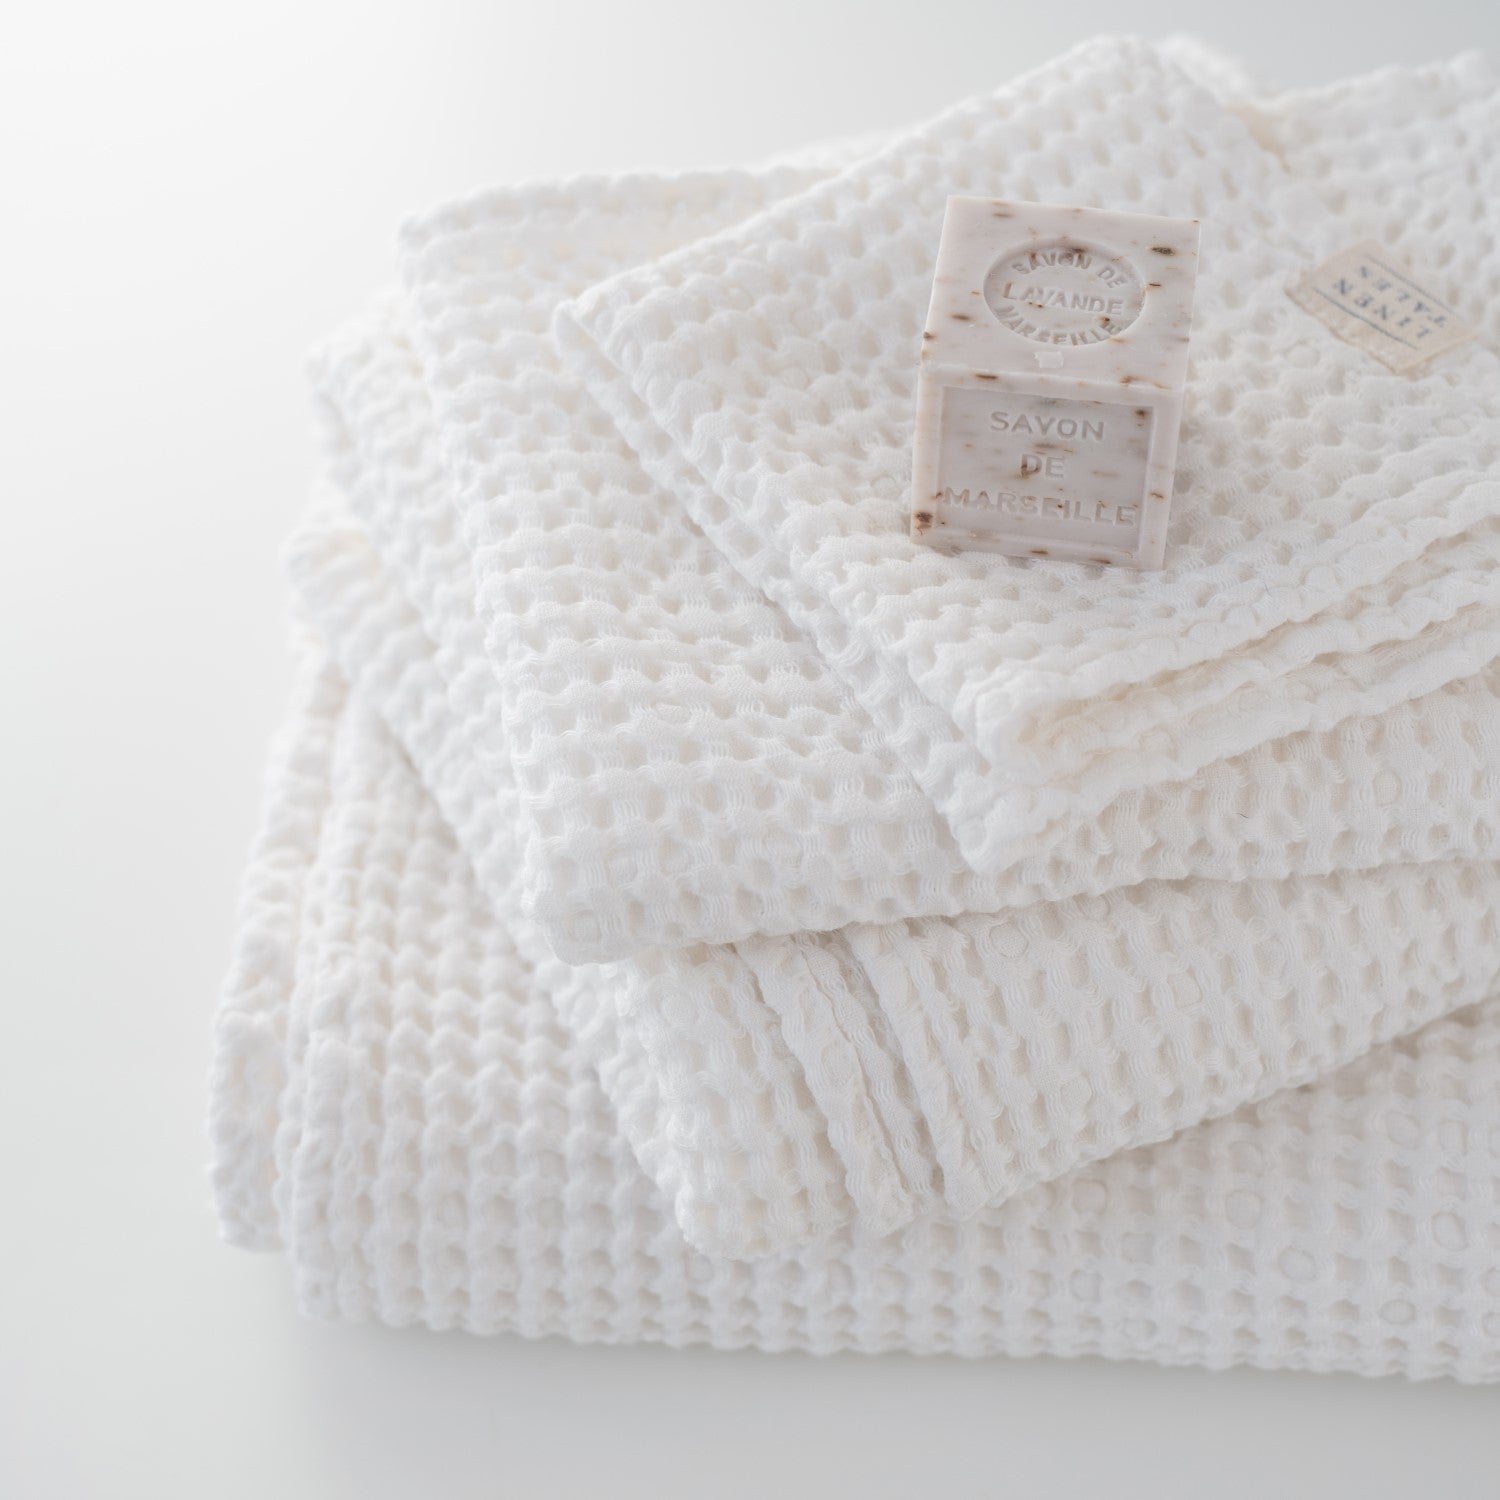 Avila Spa-Comfort Waffle Ensemble - Luxurious Linen & Cotton Towels